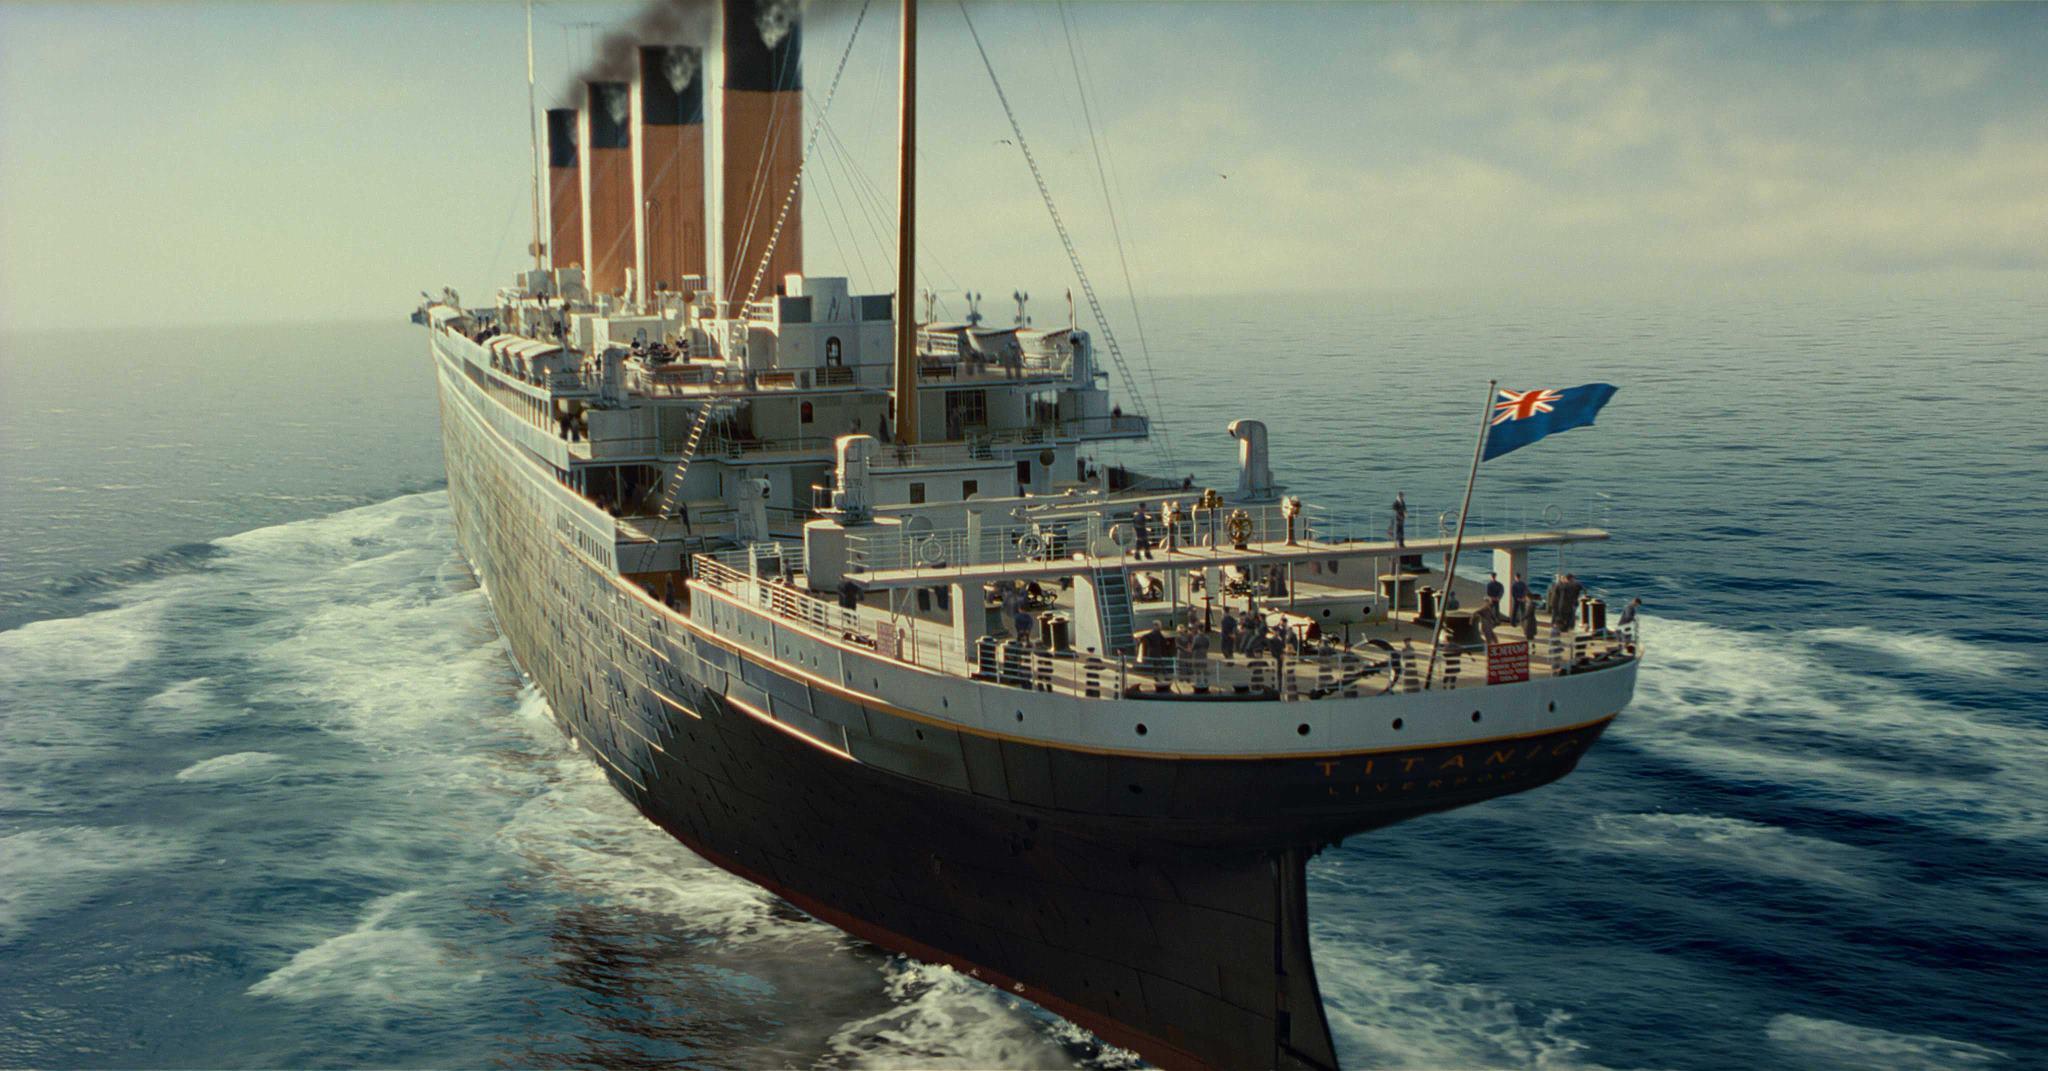 Titanic Disaster Drama Romance Ship Boat High Quality Wallpaper